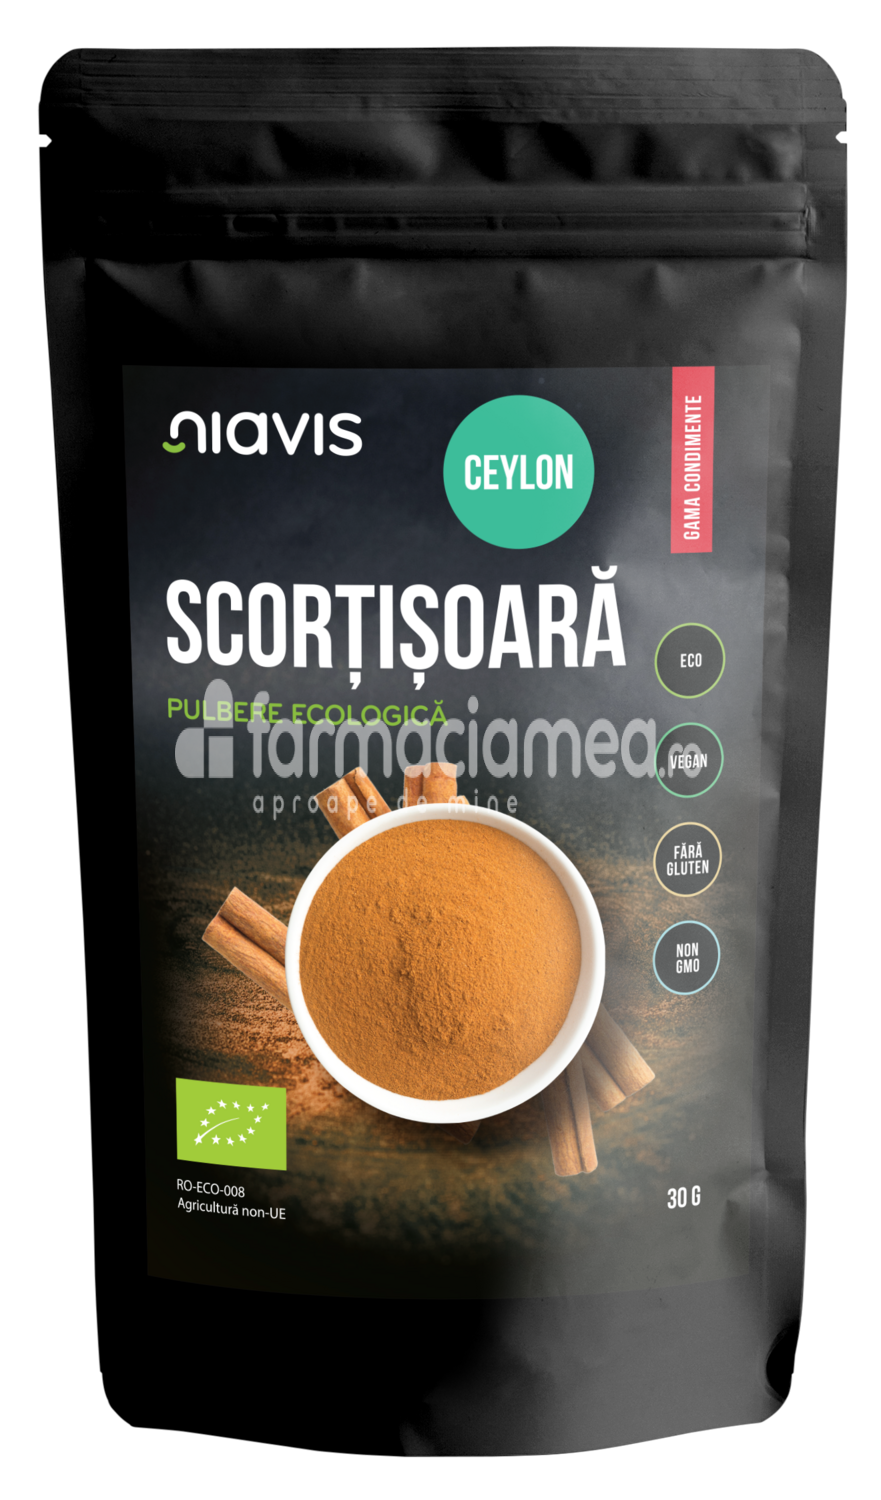 Alimente și băuturi - Niavis Scortisoara ceylon pulbere ecologica Bio, 30 g, farmaciamea.ro